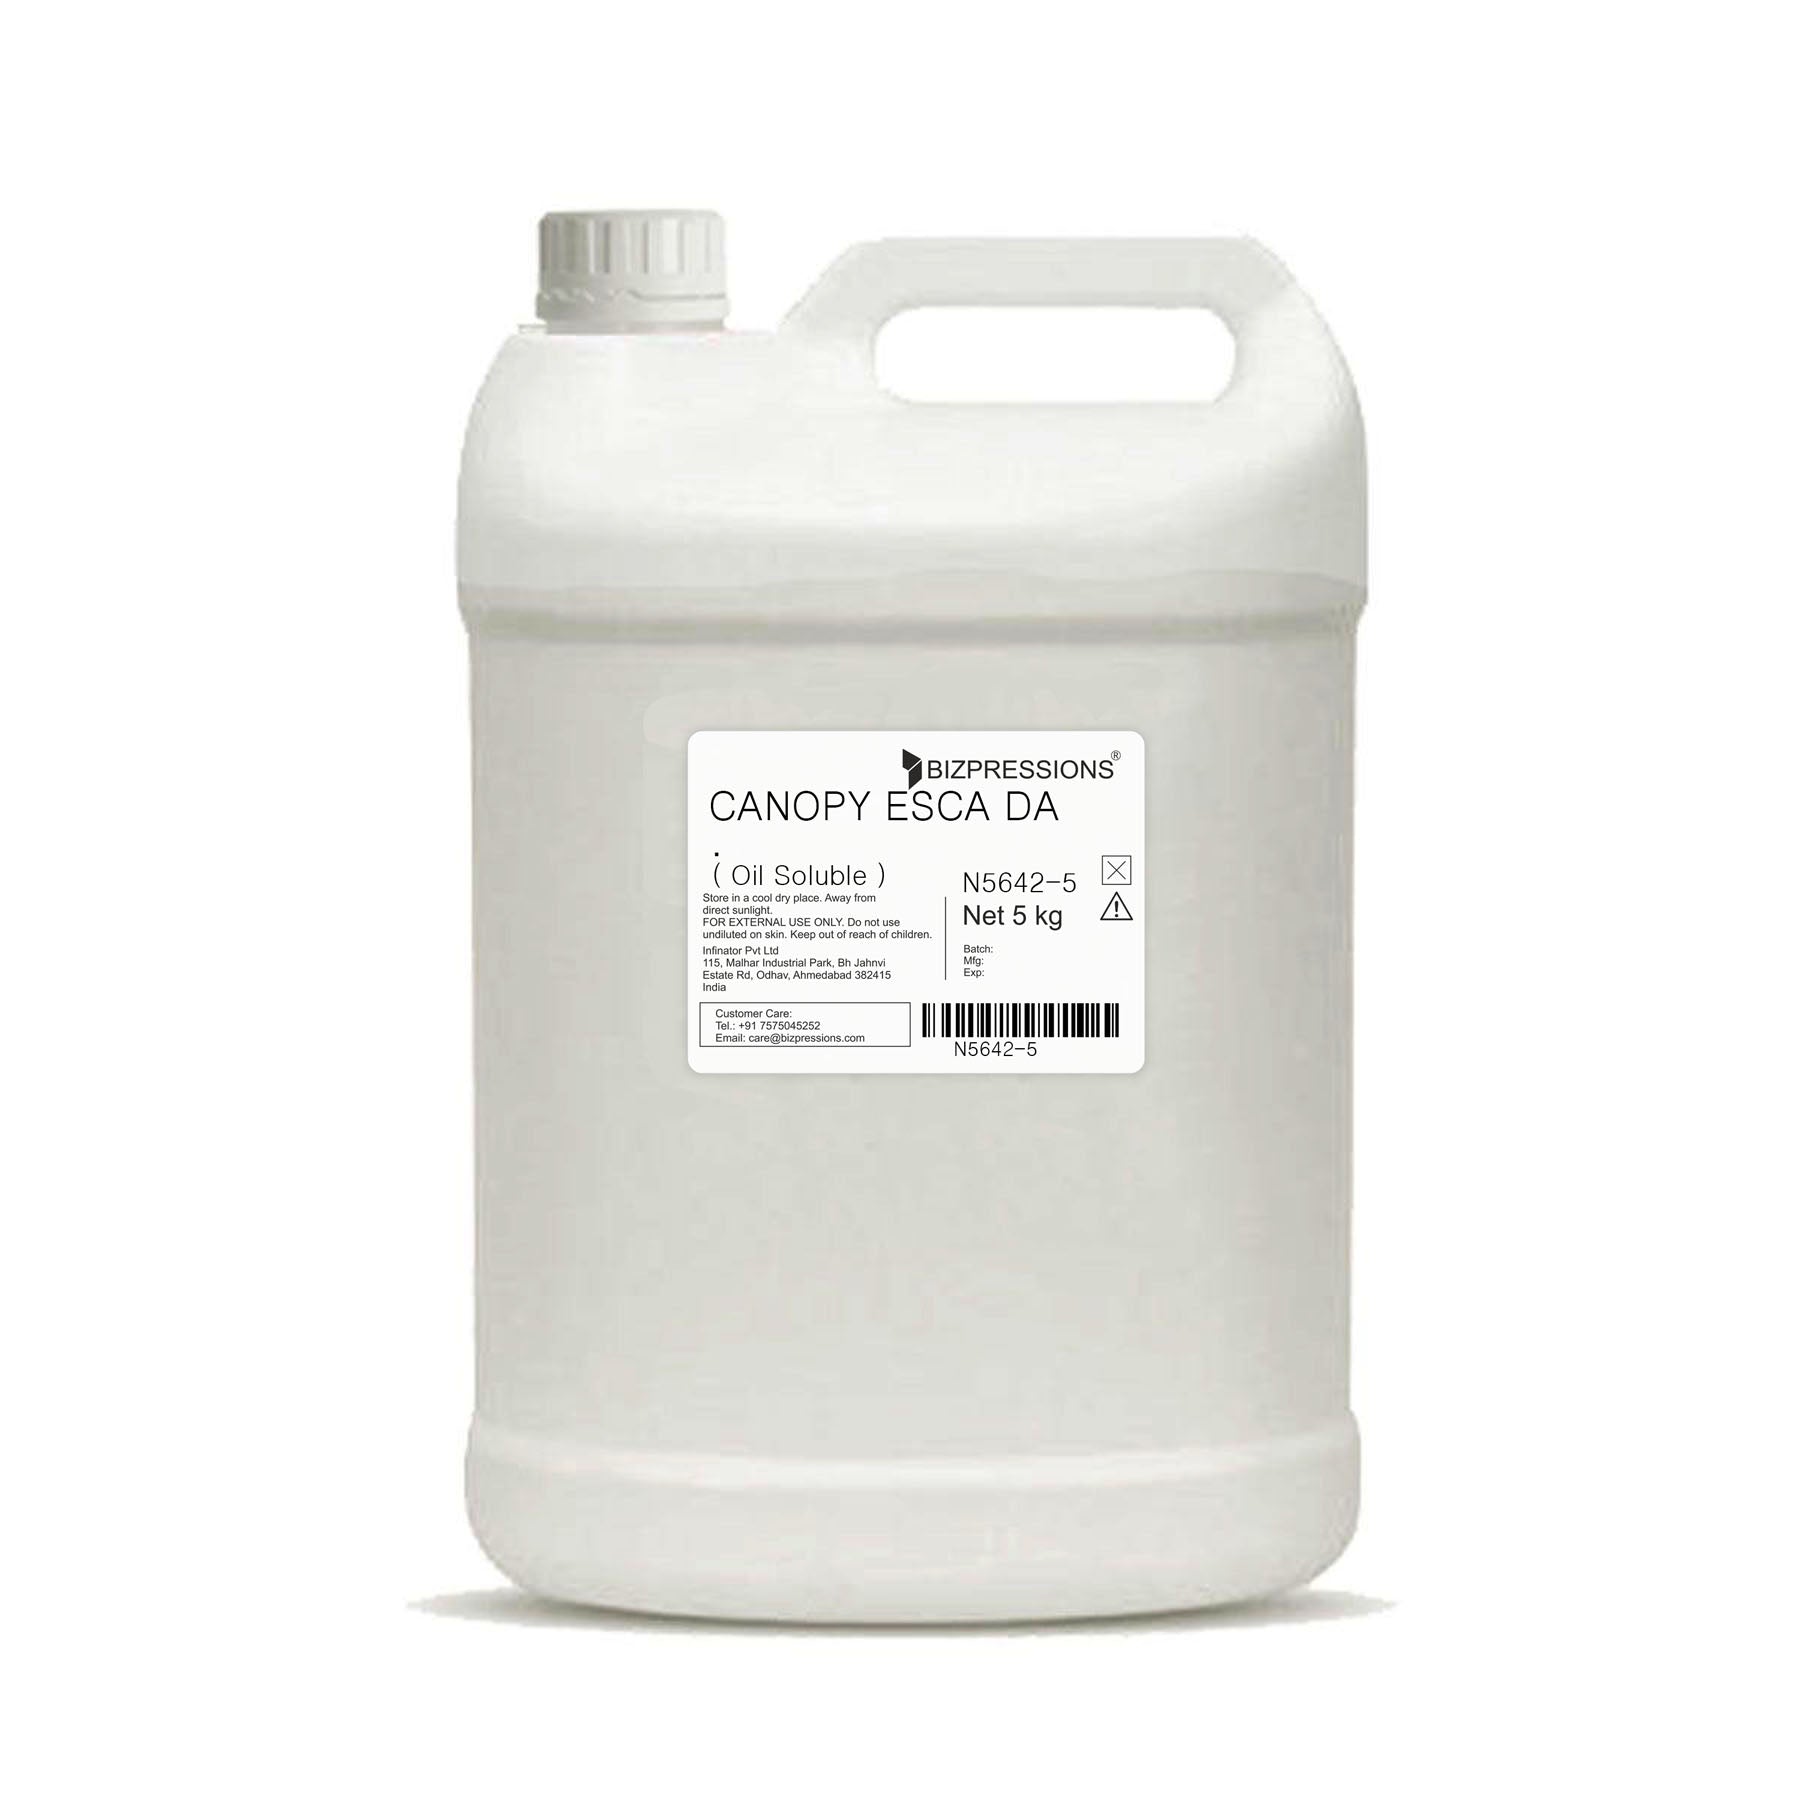 CANOPY ESCADA - Fragrance ( Oil Soluble ) - 5 kg